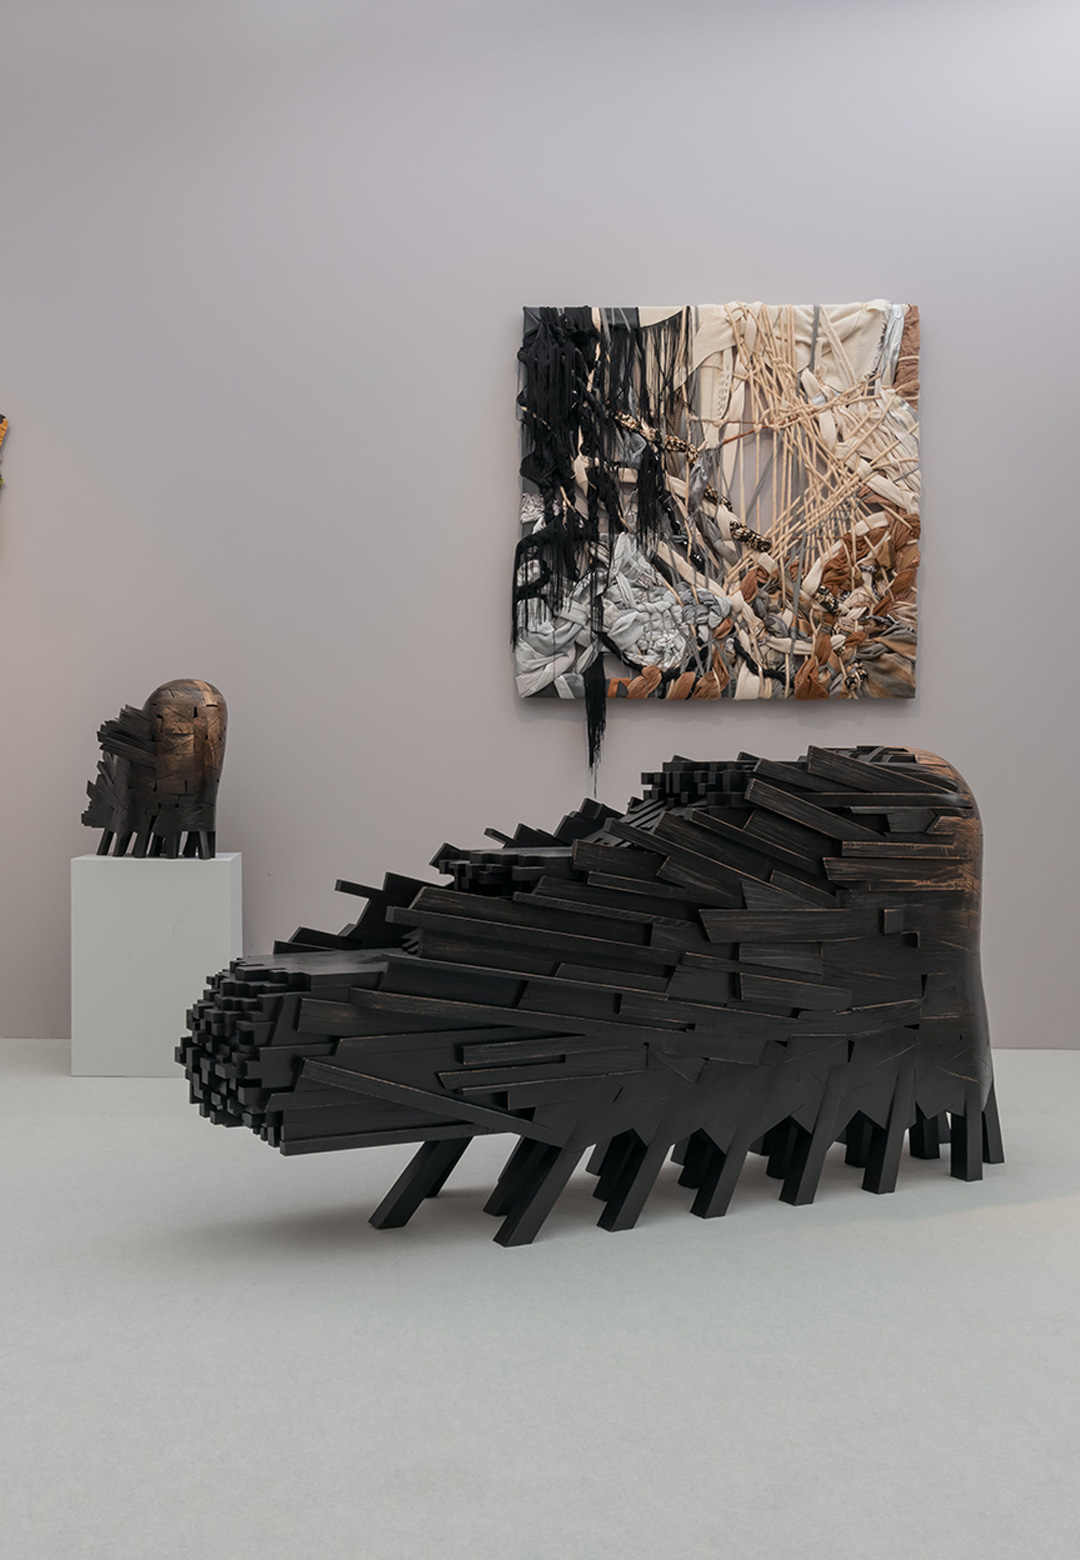 Mia Karlova Galerie brings biomorphic sculptures and artworks to PAN Amsterdam